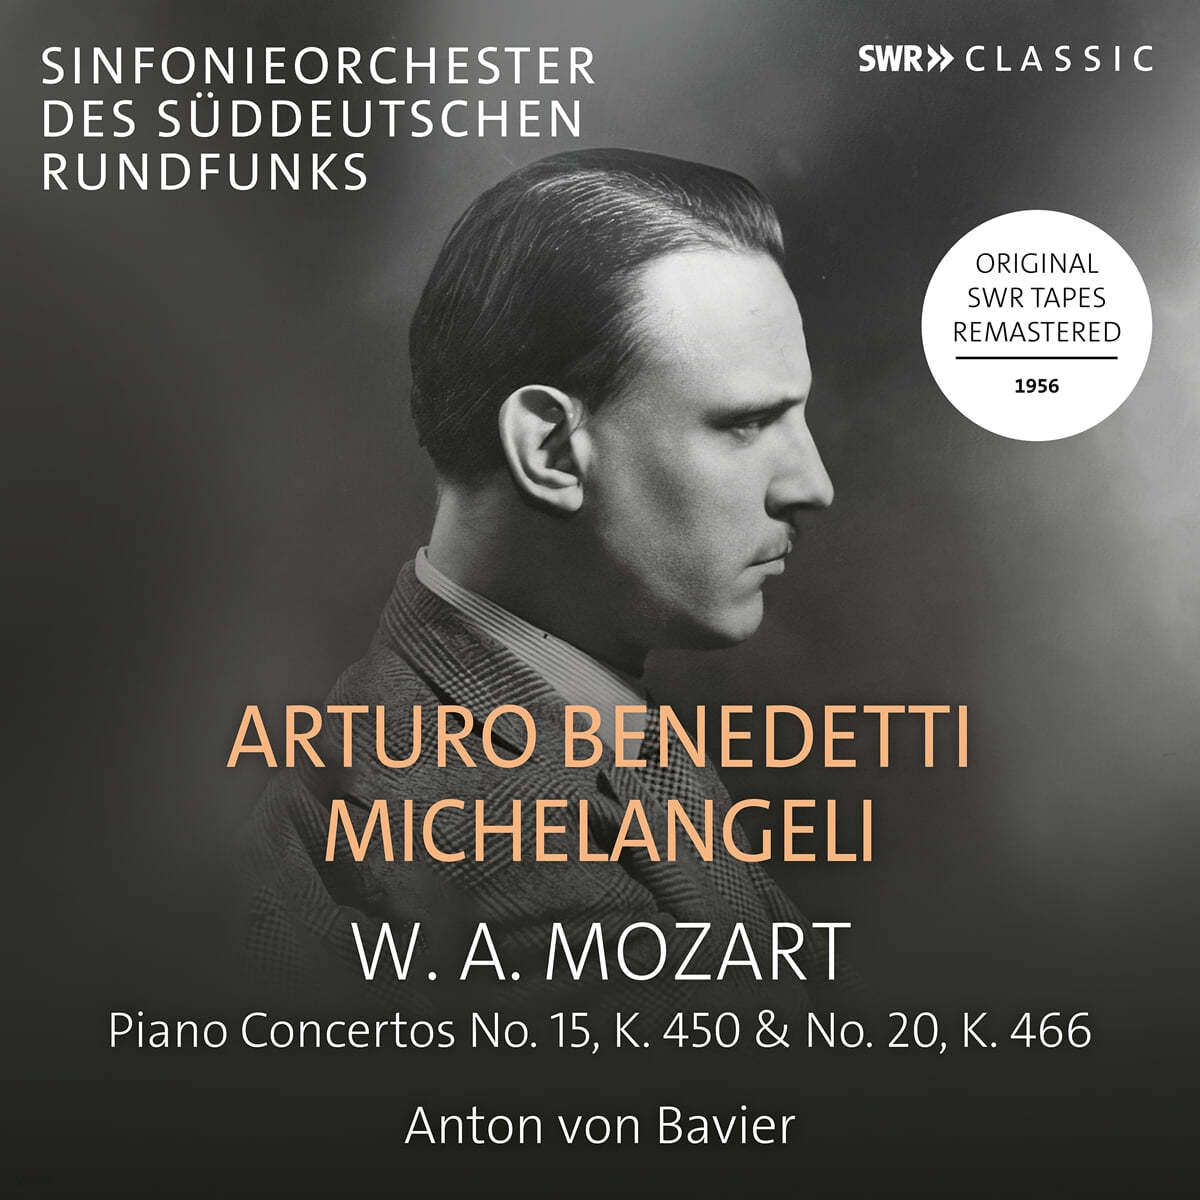 Arturo Benedetti Michelangeli 모차르트: 피아노 협주곡 20번, 15번 (Mozart: Piano Concertos K.450 & K.466)